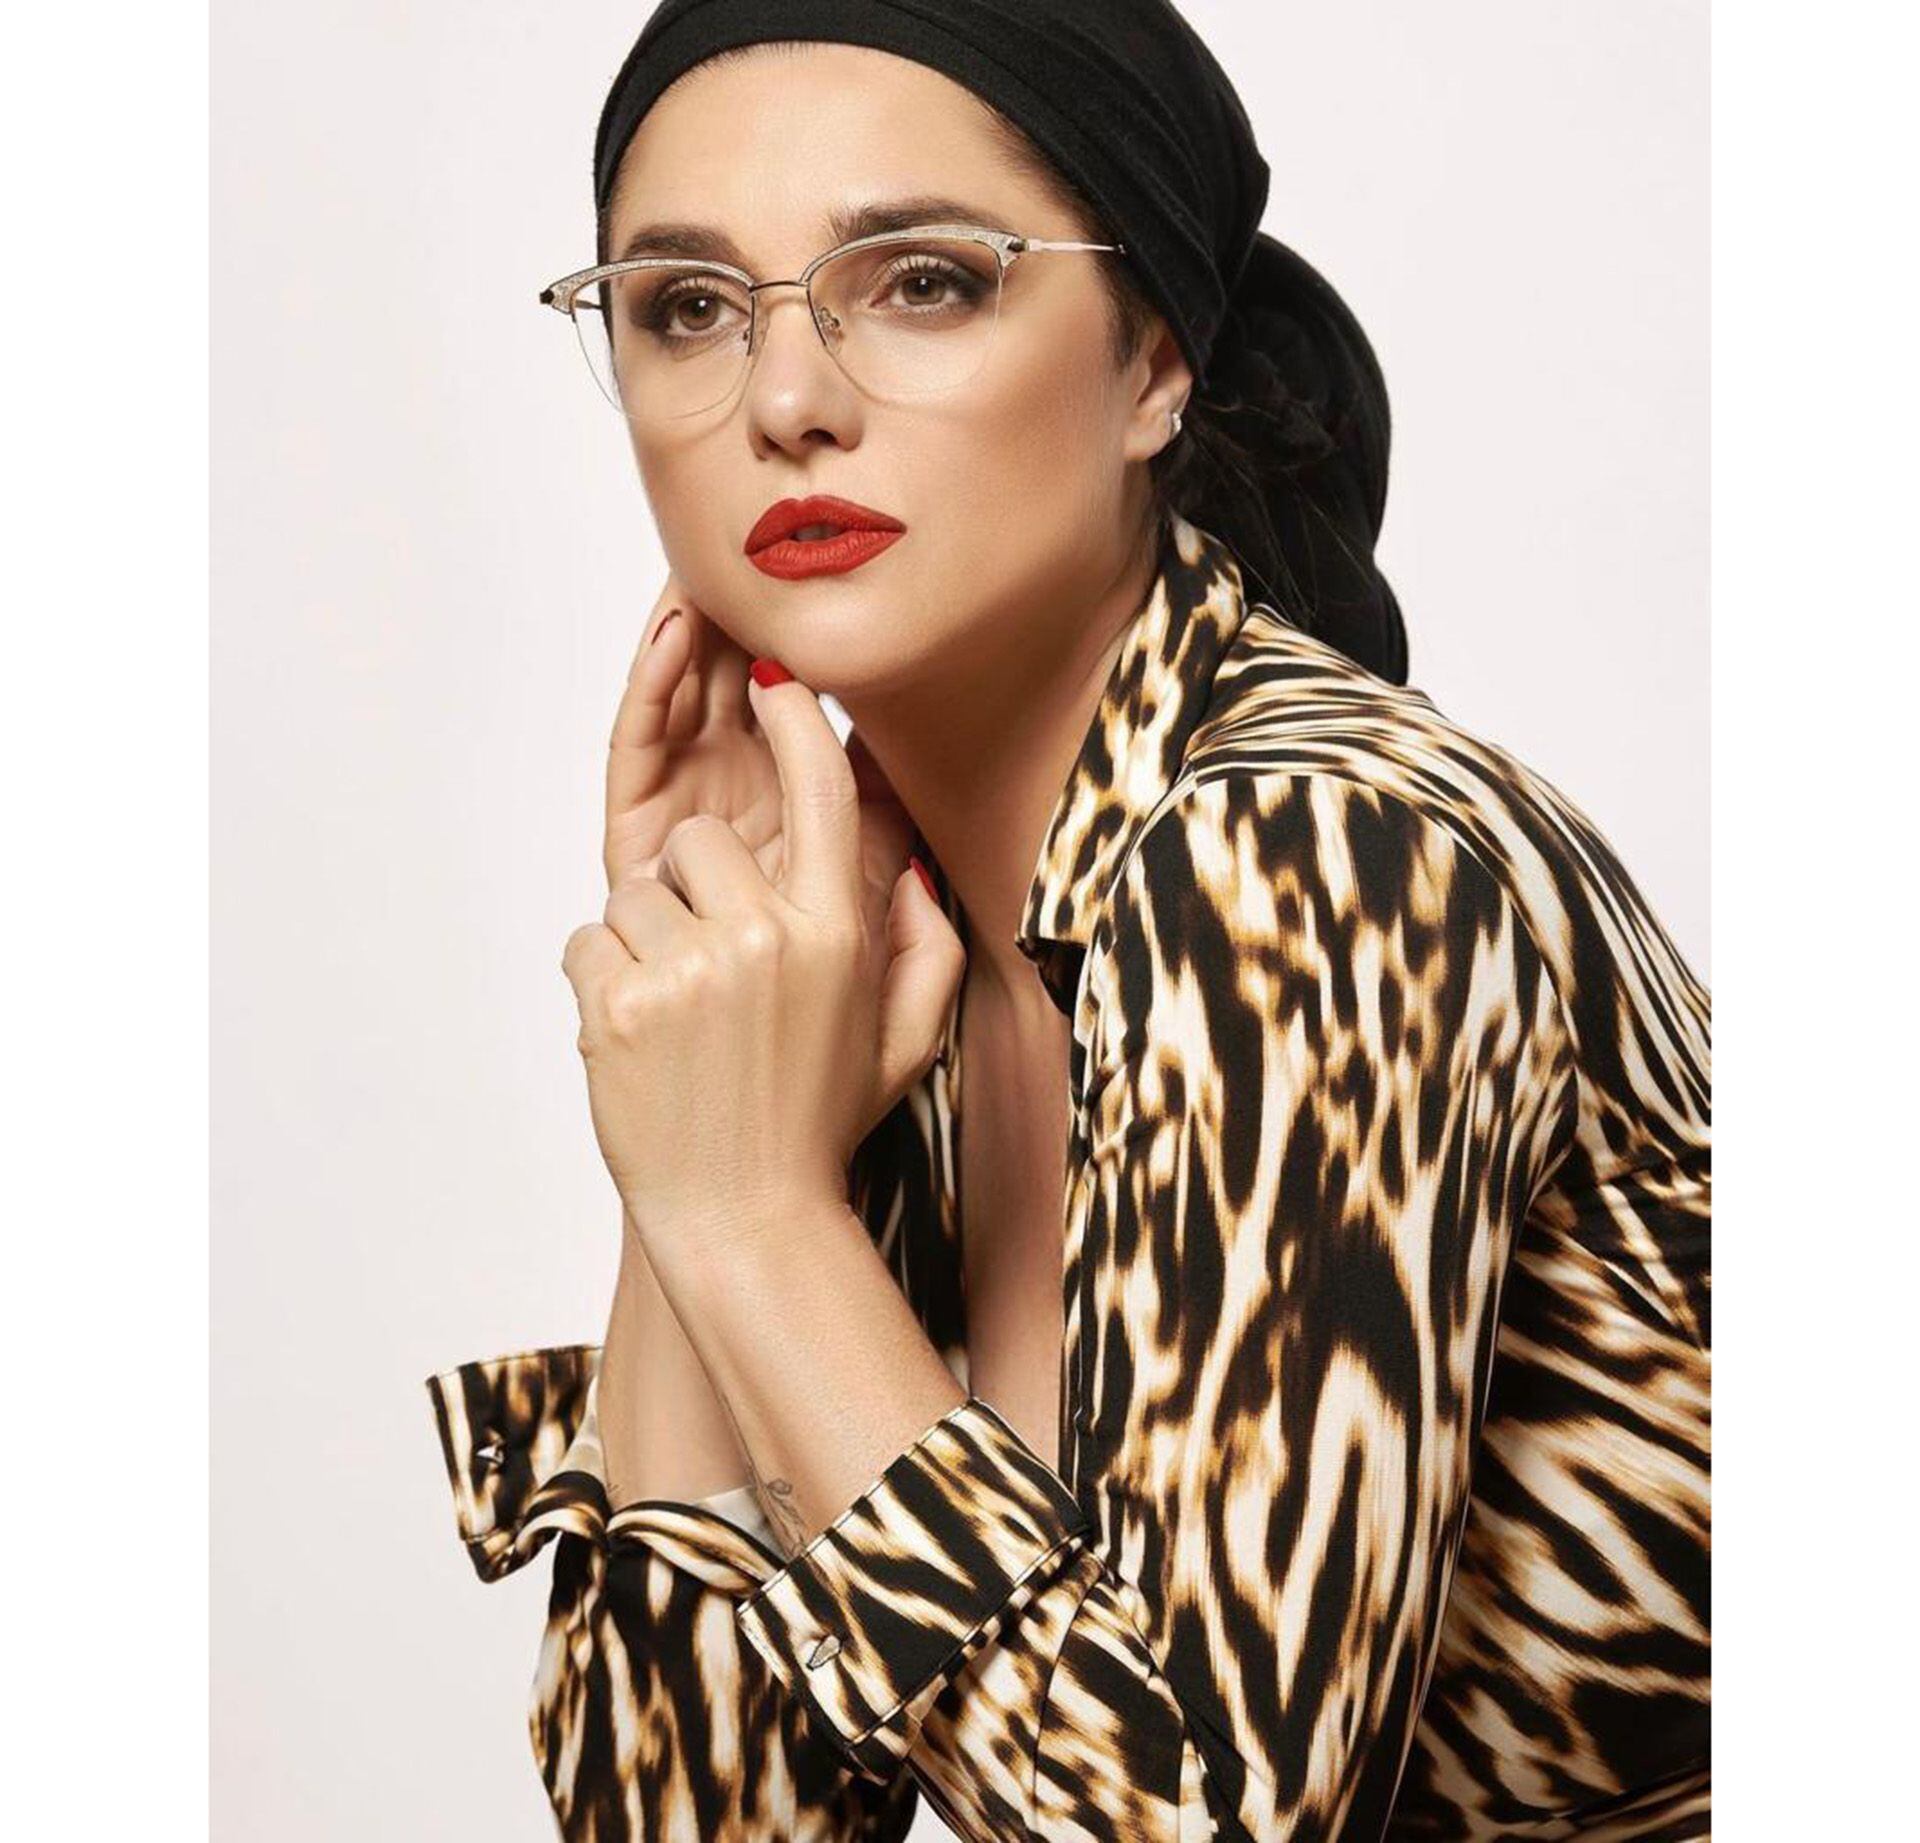 Araceli González como modelo de su propia línea de anteojos